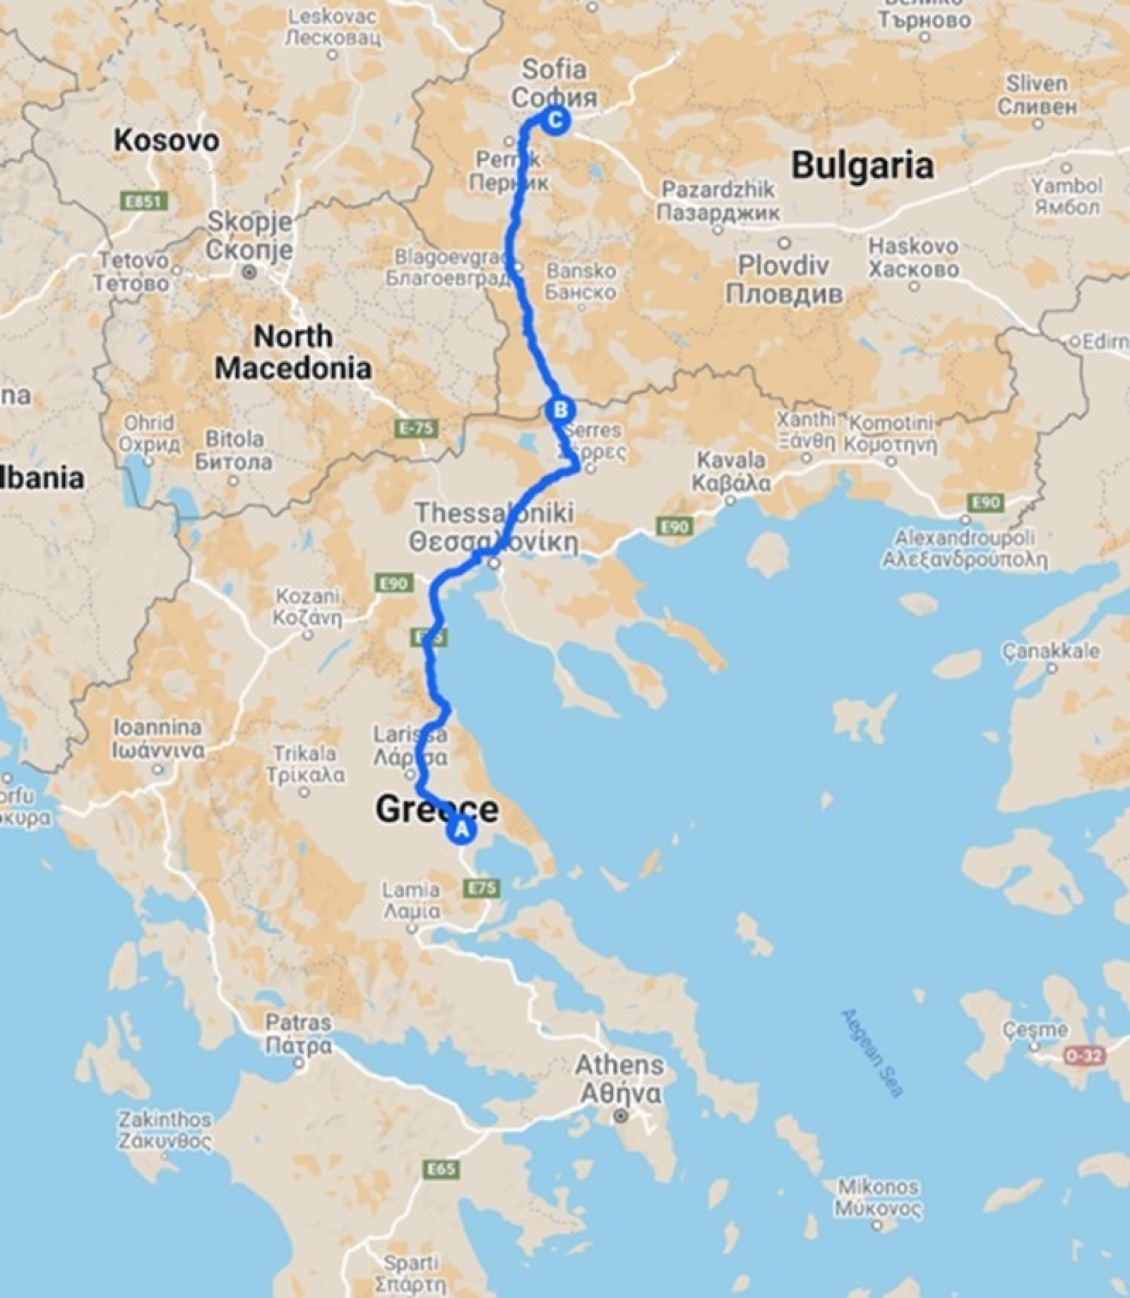 5g_seagul_gr-bg_cross-border_corridor-map_1